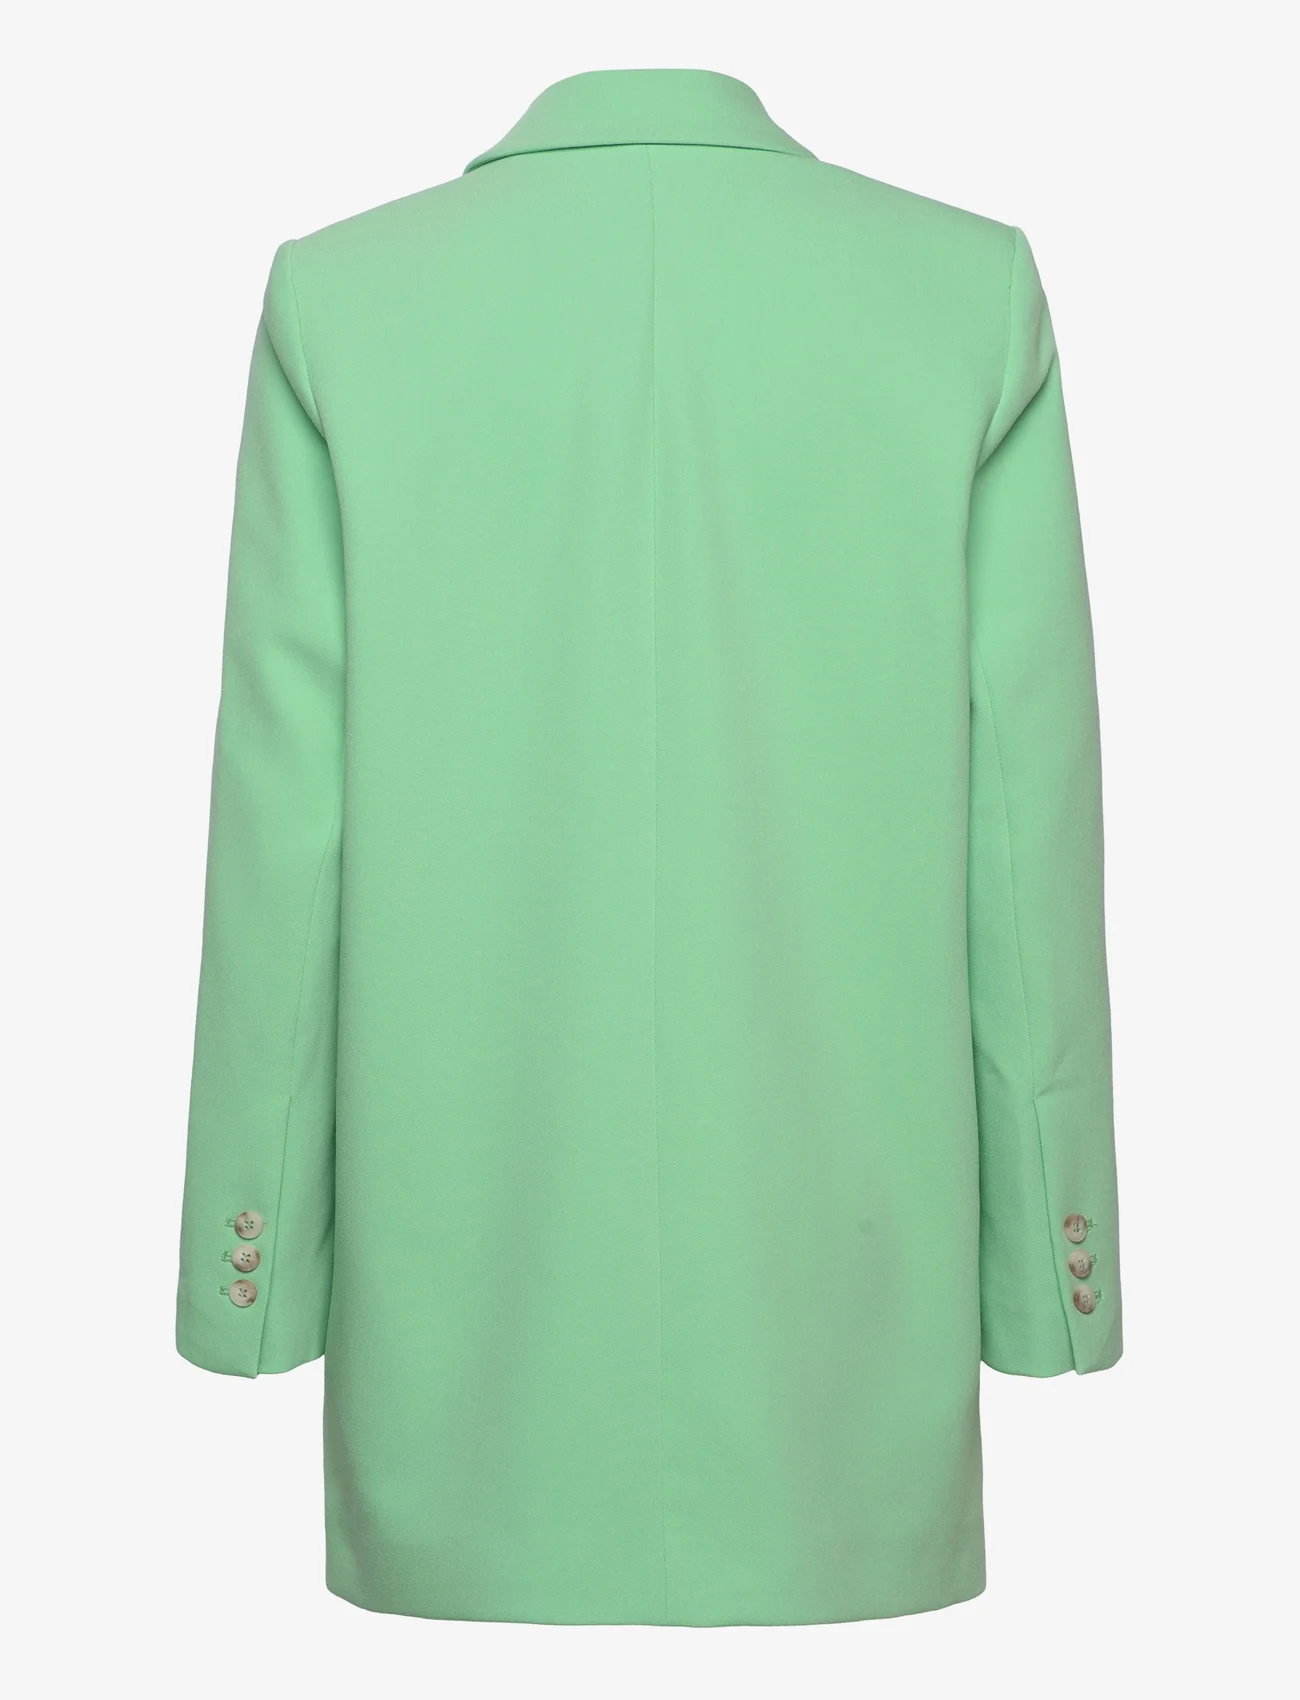 Selected Femme - SLFNEW MYLA LS RELAXED BLAZER NOOS - ballīšu apģērbs par outlet cenām - absinthe green - 1